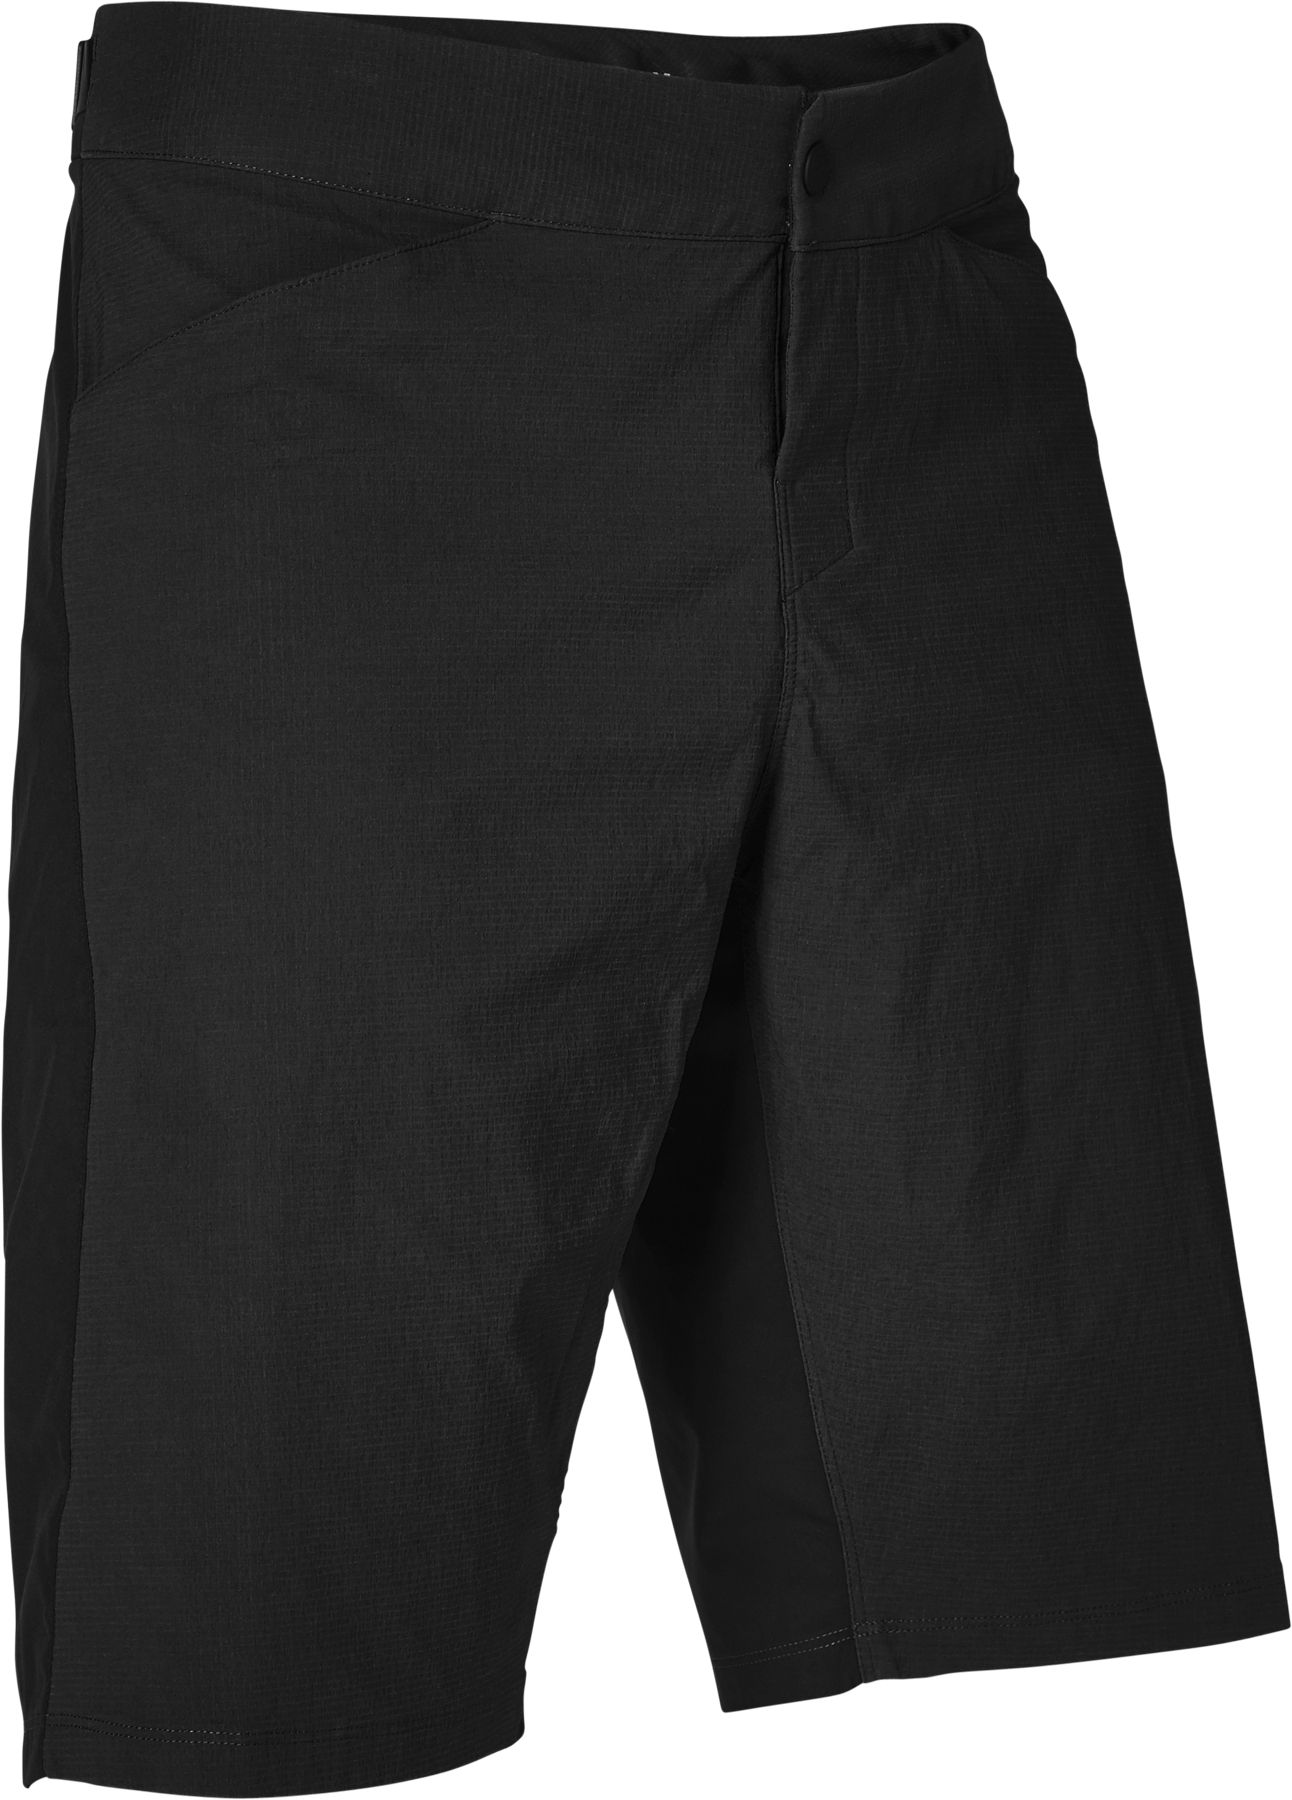 FOX Ranger Water Shorts, black